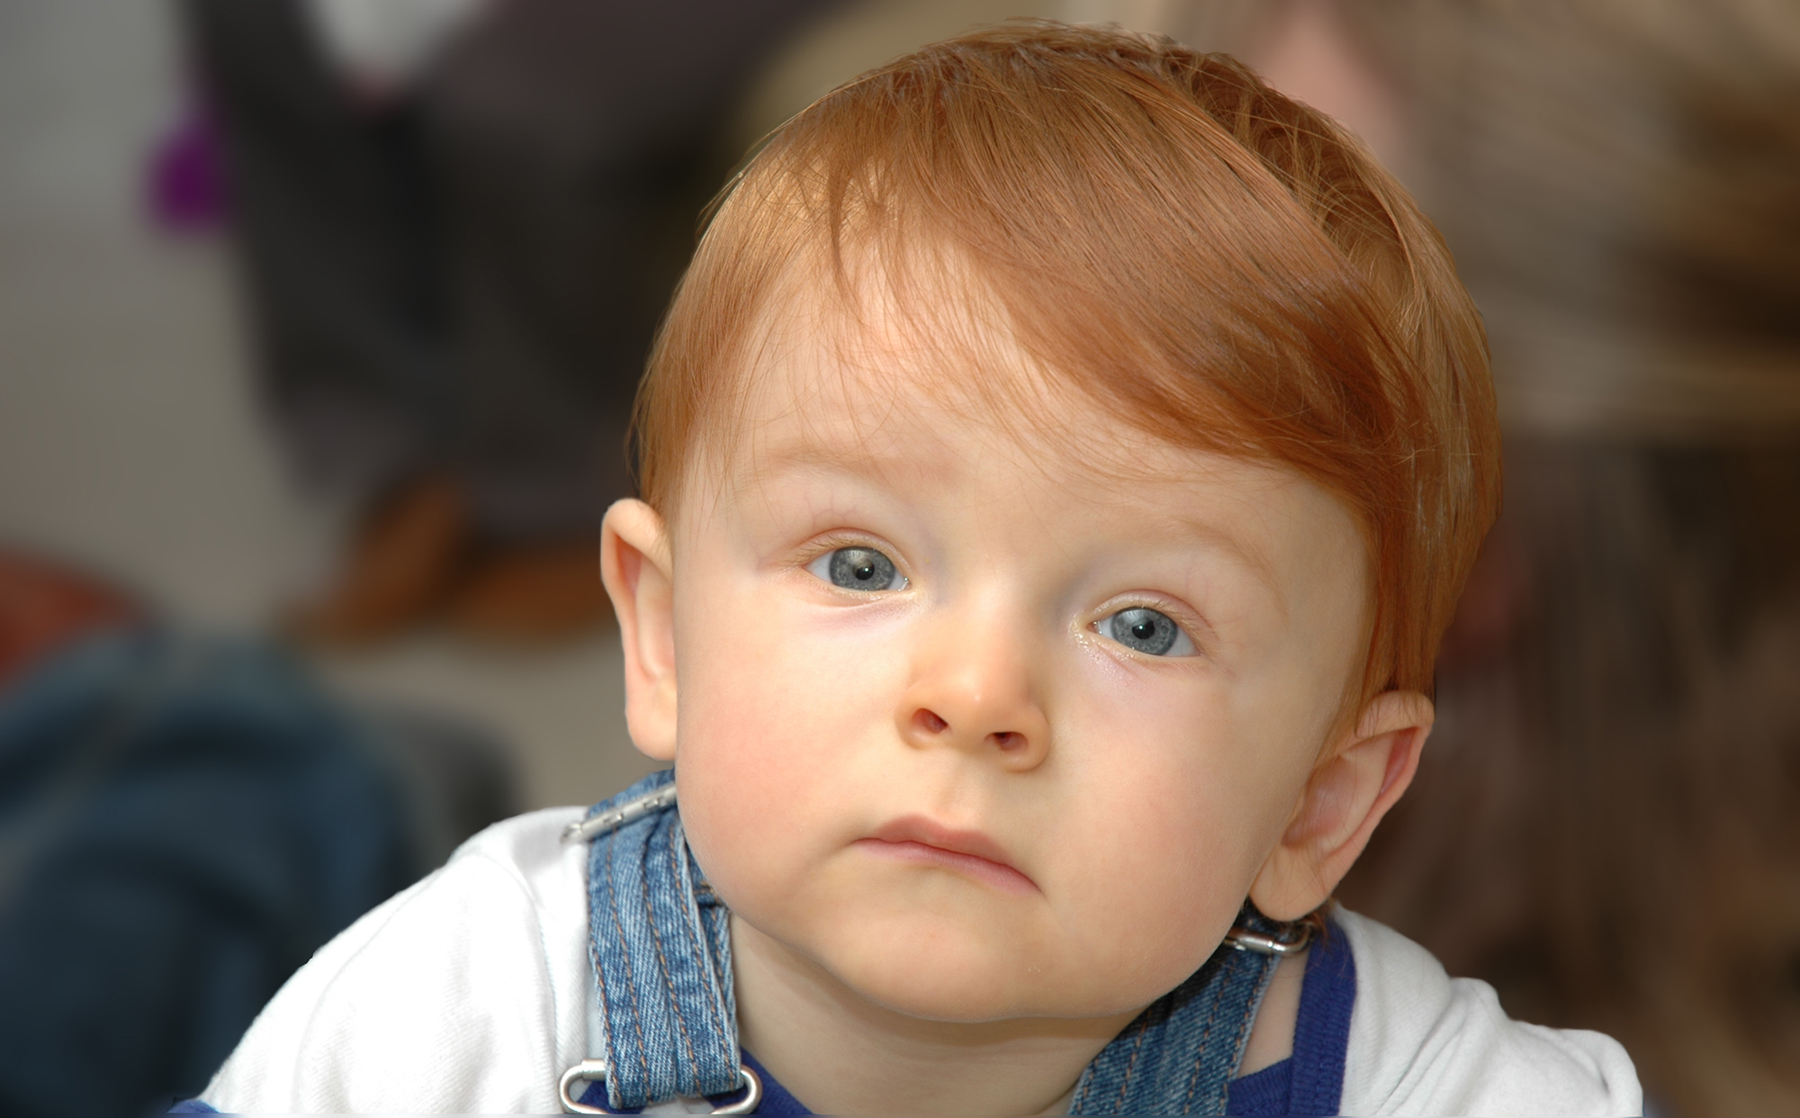 File:Redheaded child mesmerized 3.jpg - Wikimedia Commons